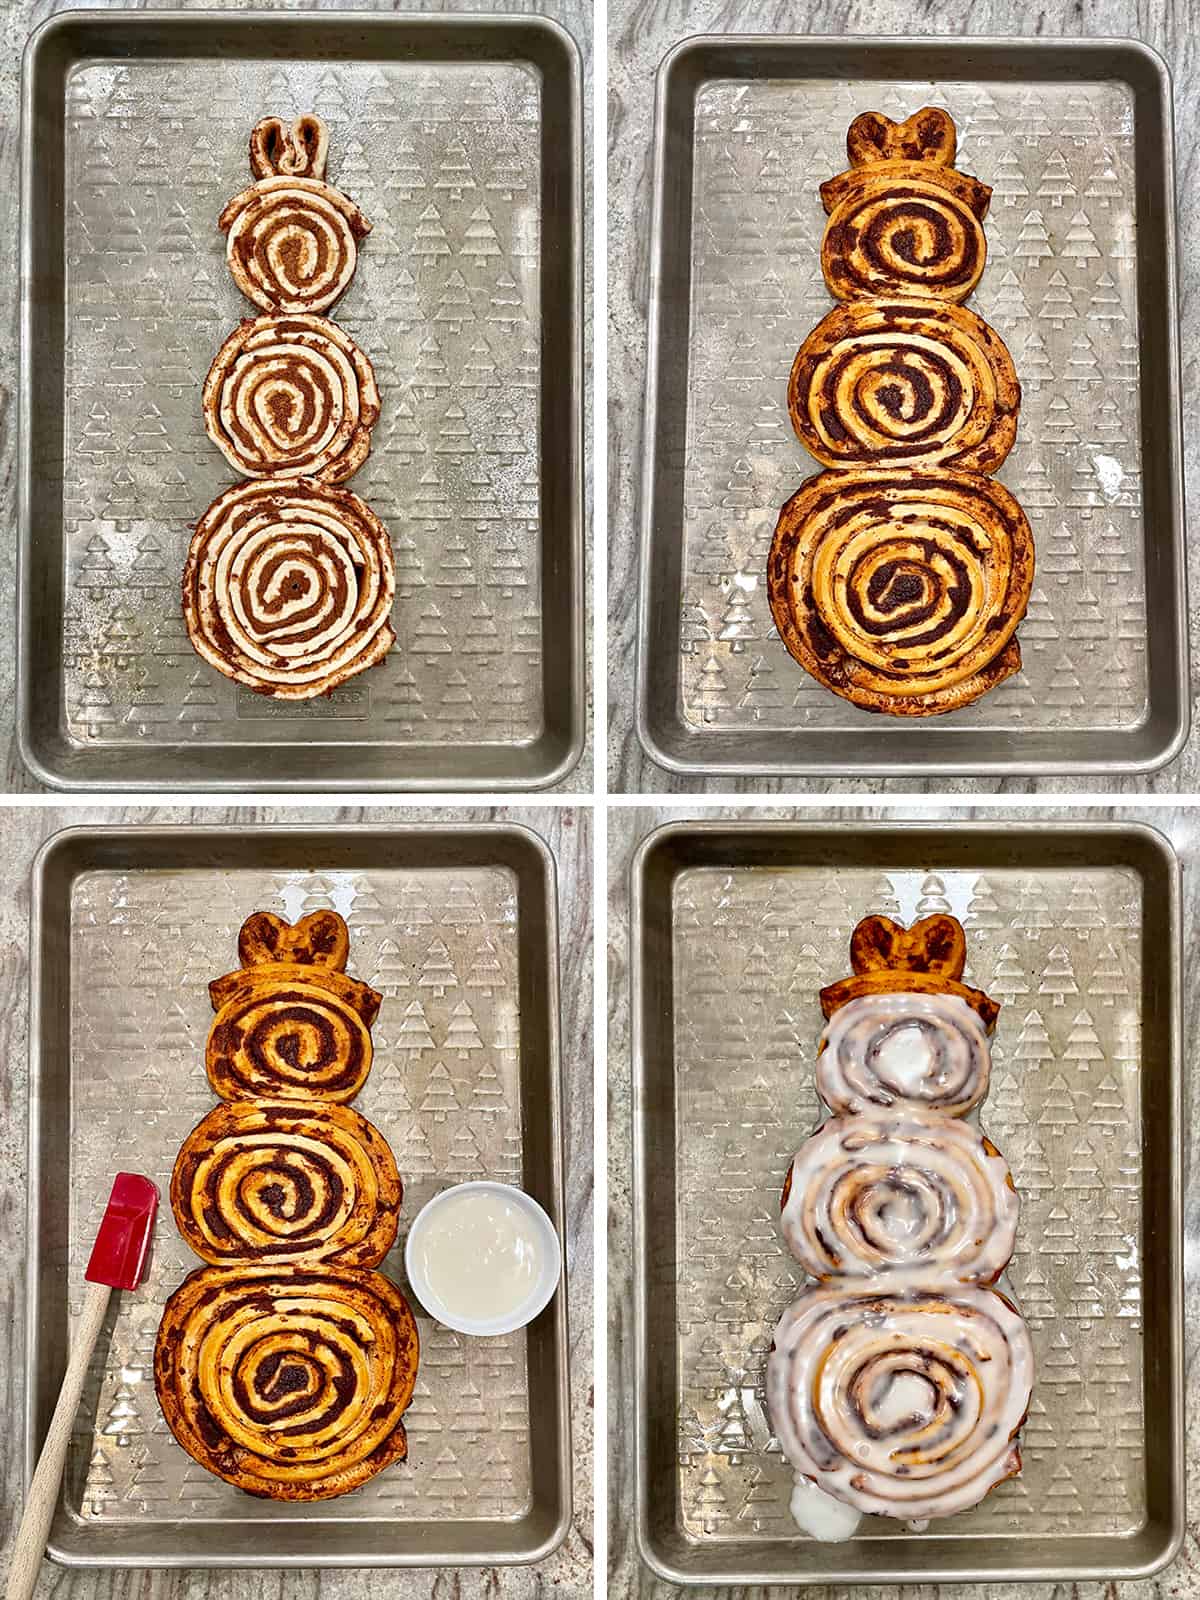 Cinnamon Roll Snowman Breakfast Tray by The BakerMama